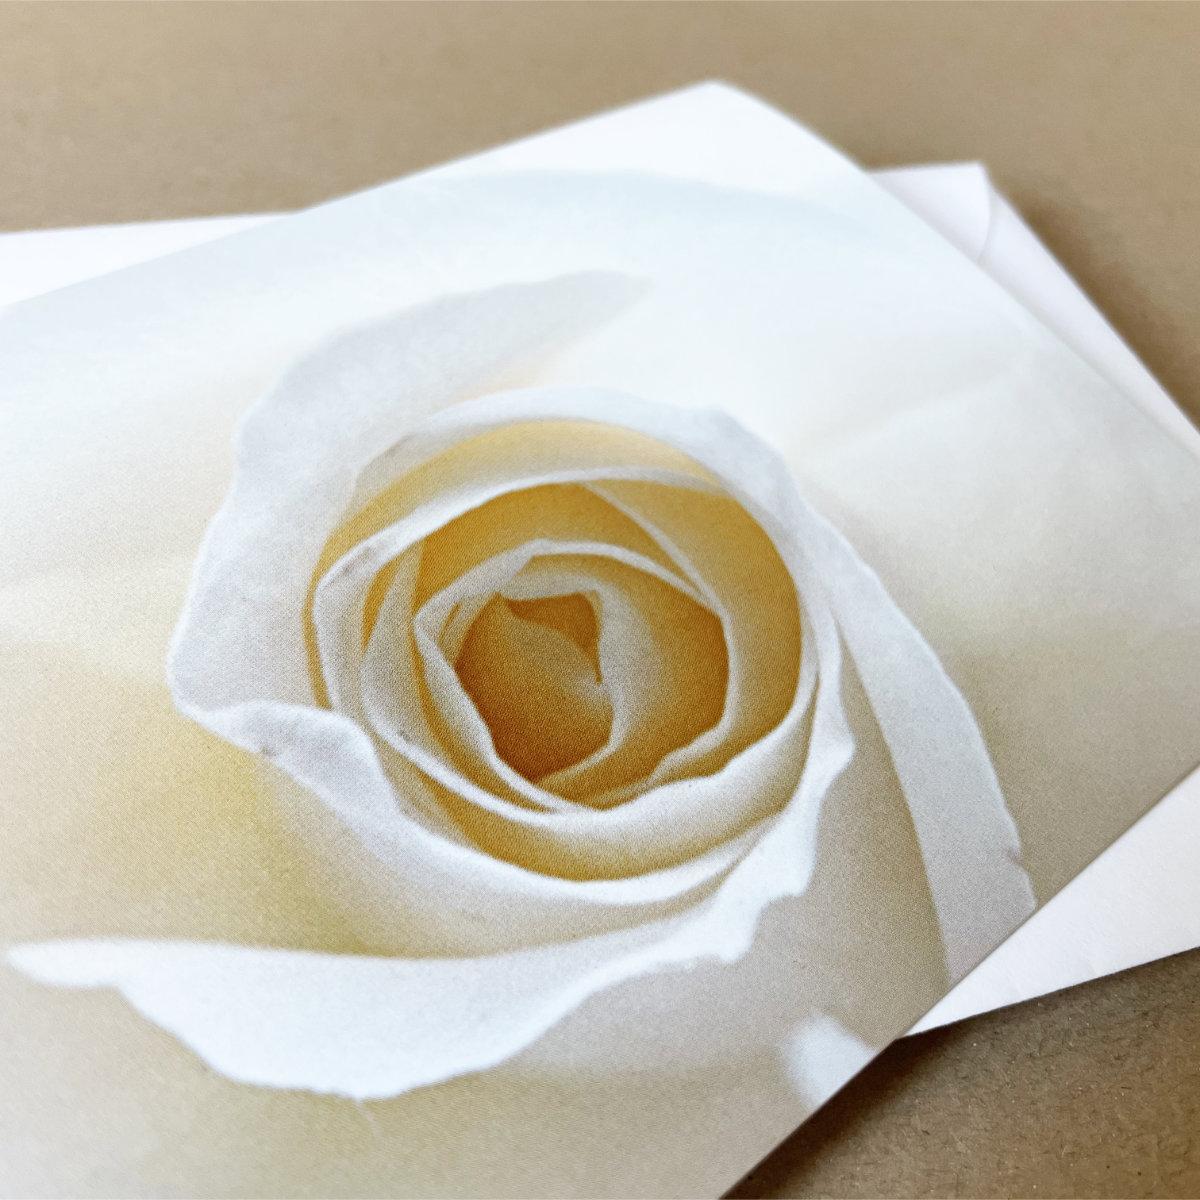 weiße Rose - edle Karte mit gefüttertem Umschlag